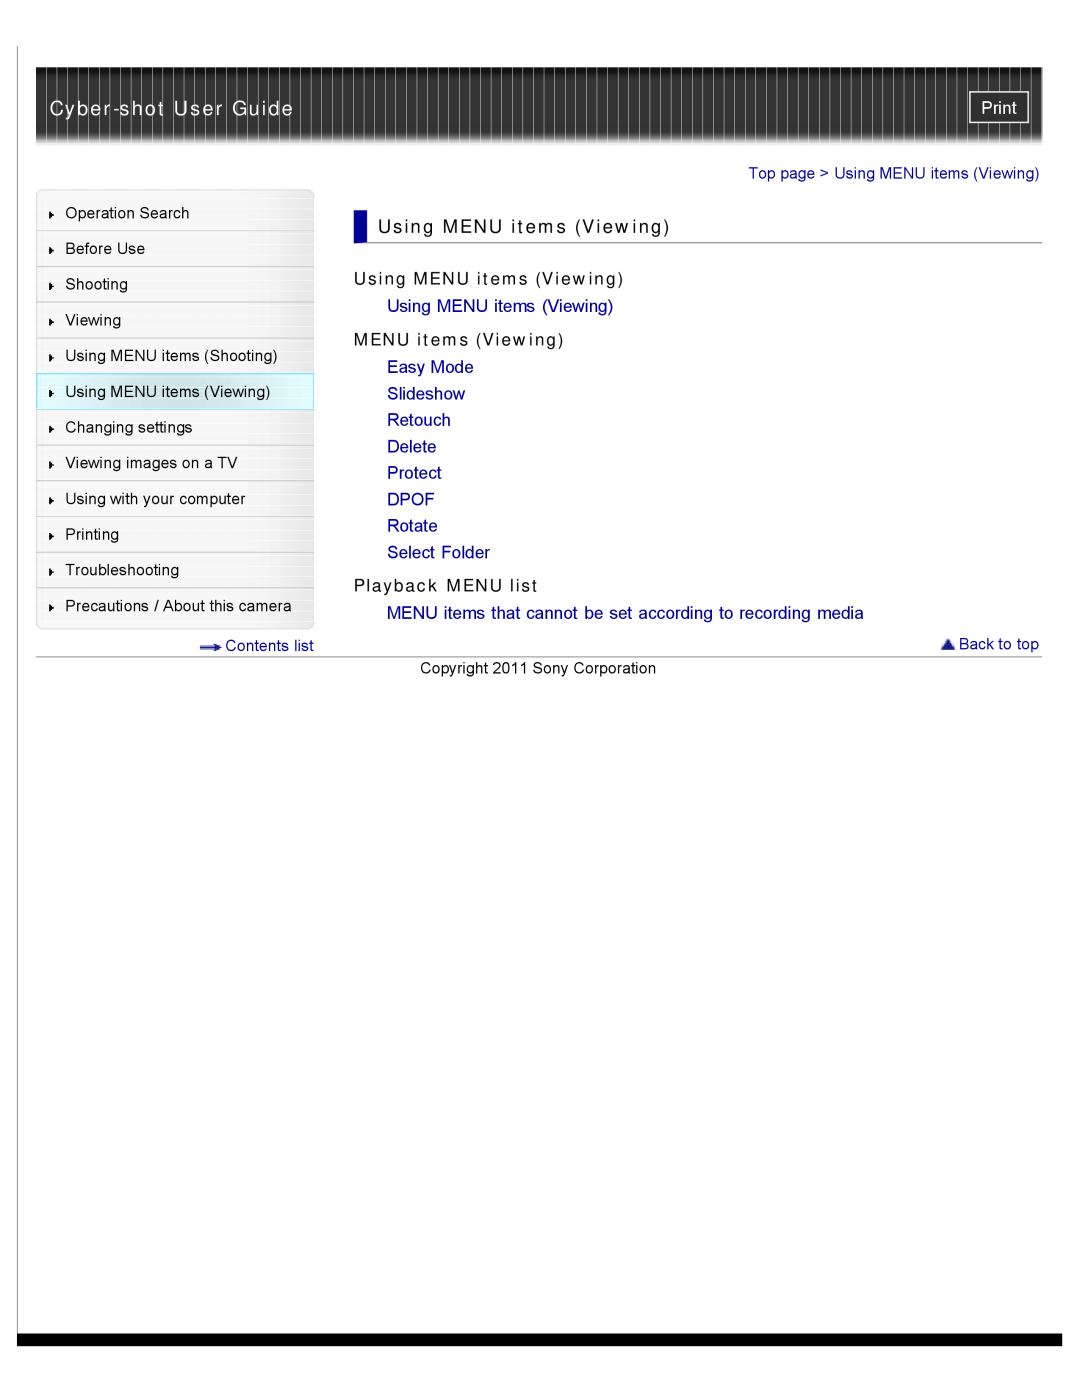 Sony DSC-W510 manual Using MENU items Viewing, Playback MENU list, Cyber-shot User Guide, Print 